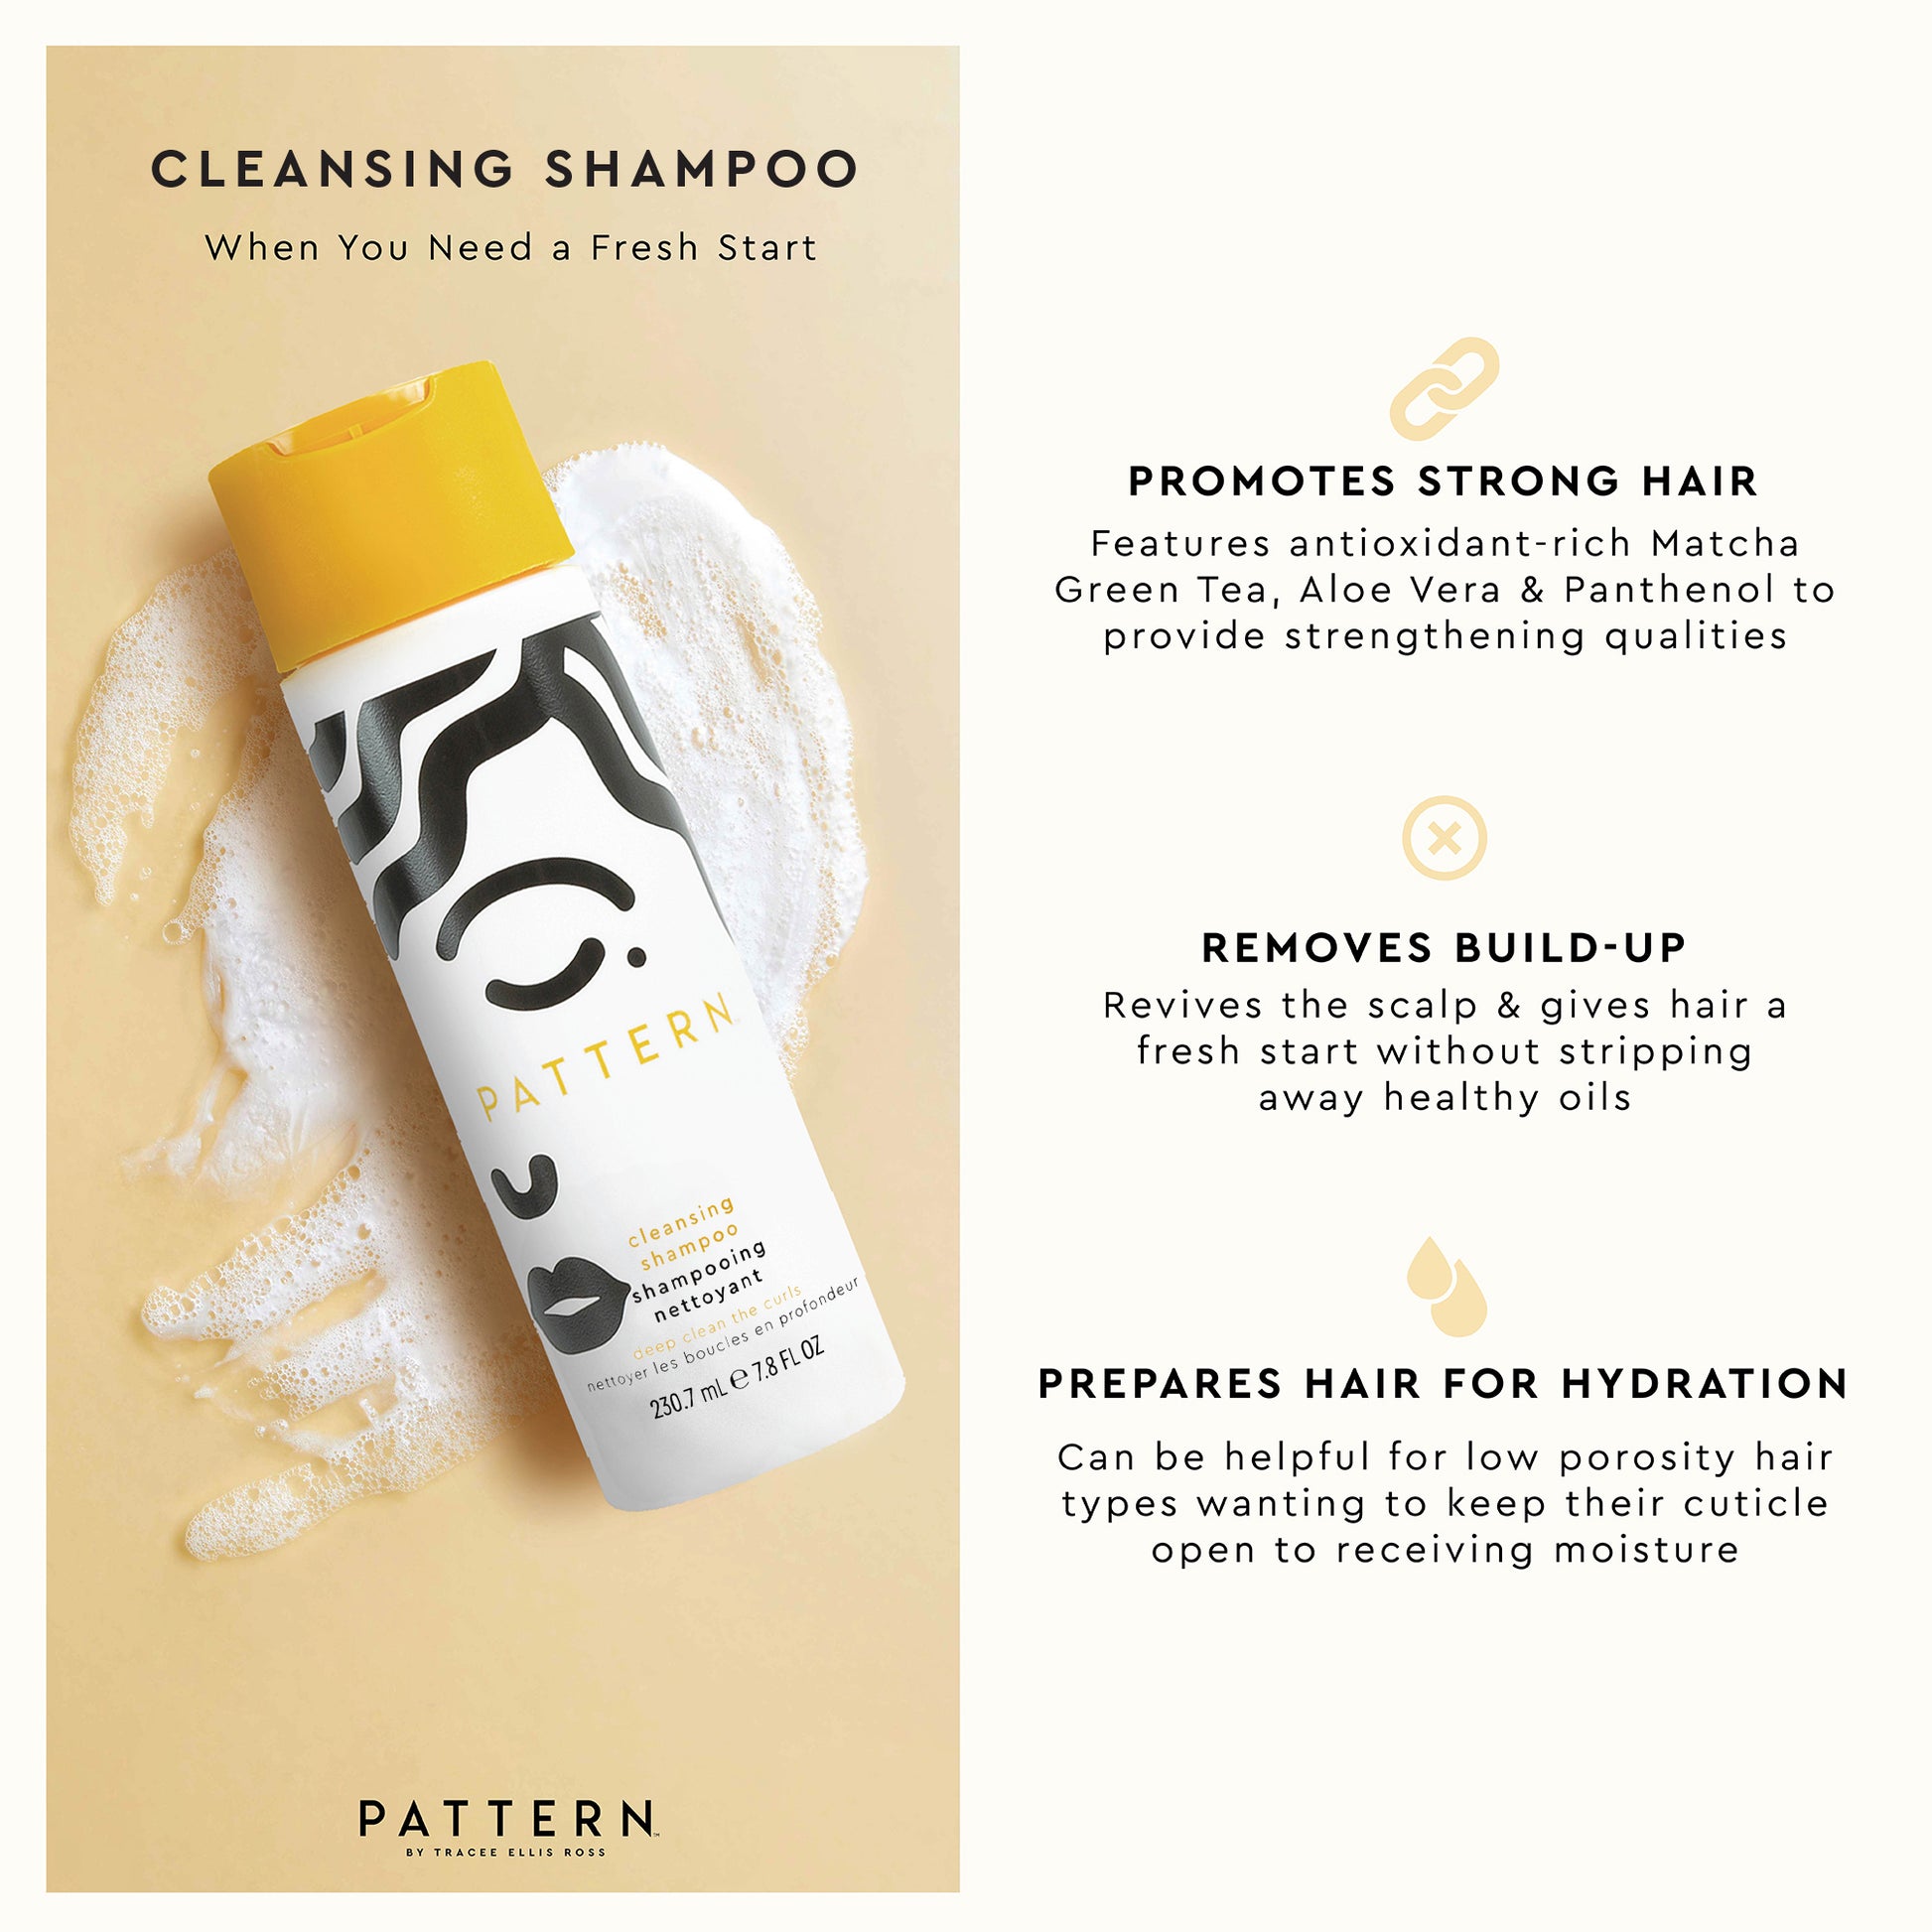 Bemyndigelse Mysterium plisseret Curl Cleansing Shampoo - Natural Hair Clarifier | PATTERN – Pattern Beauty